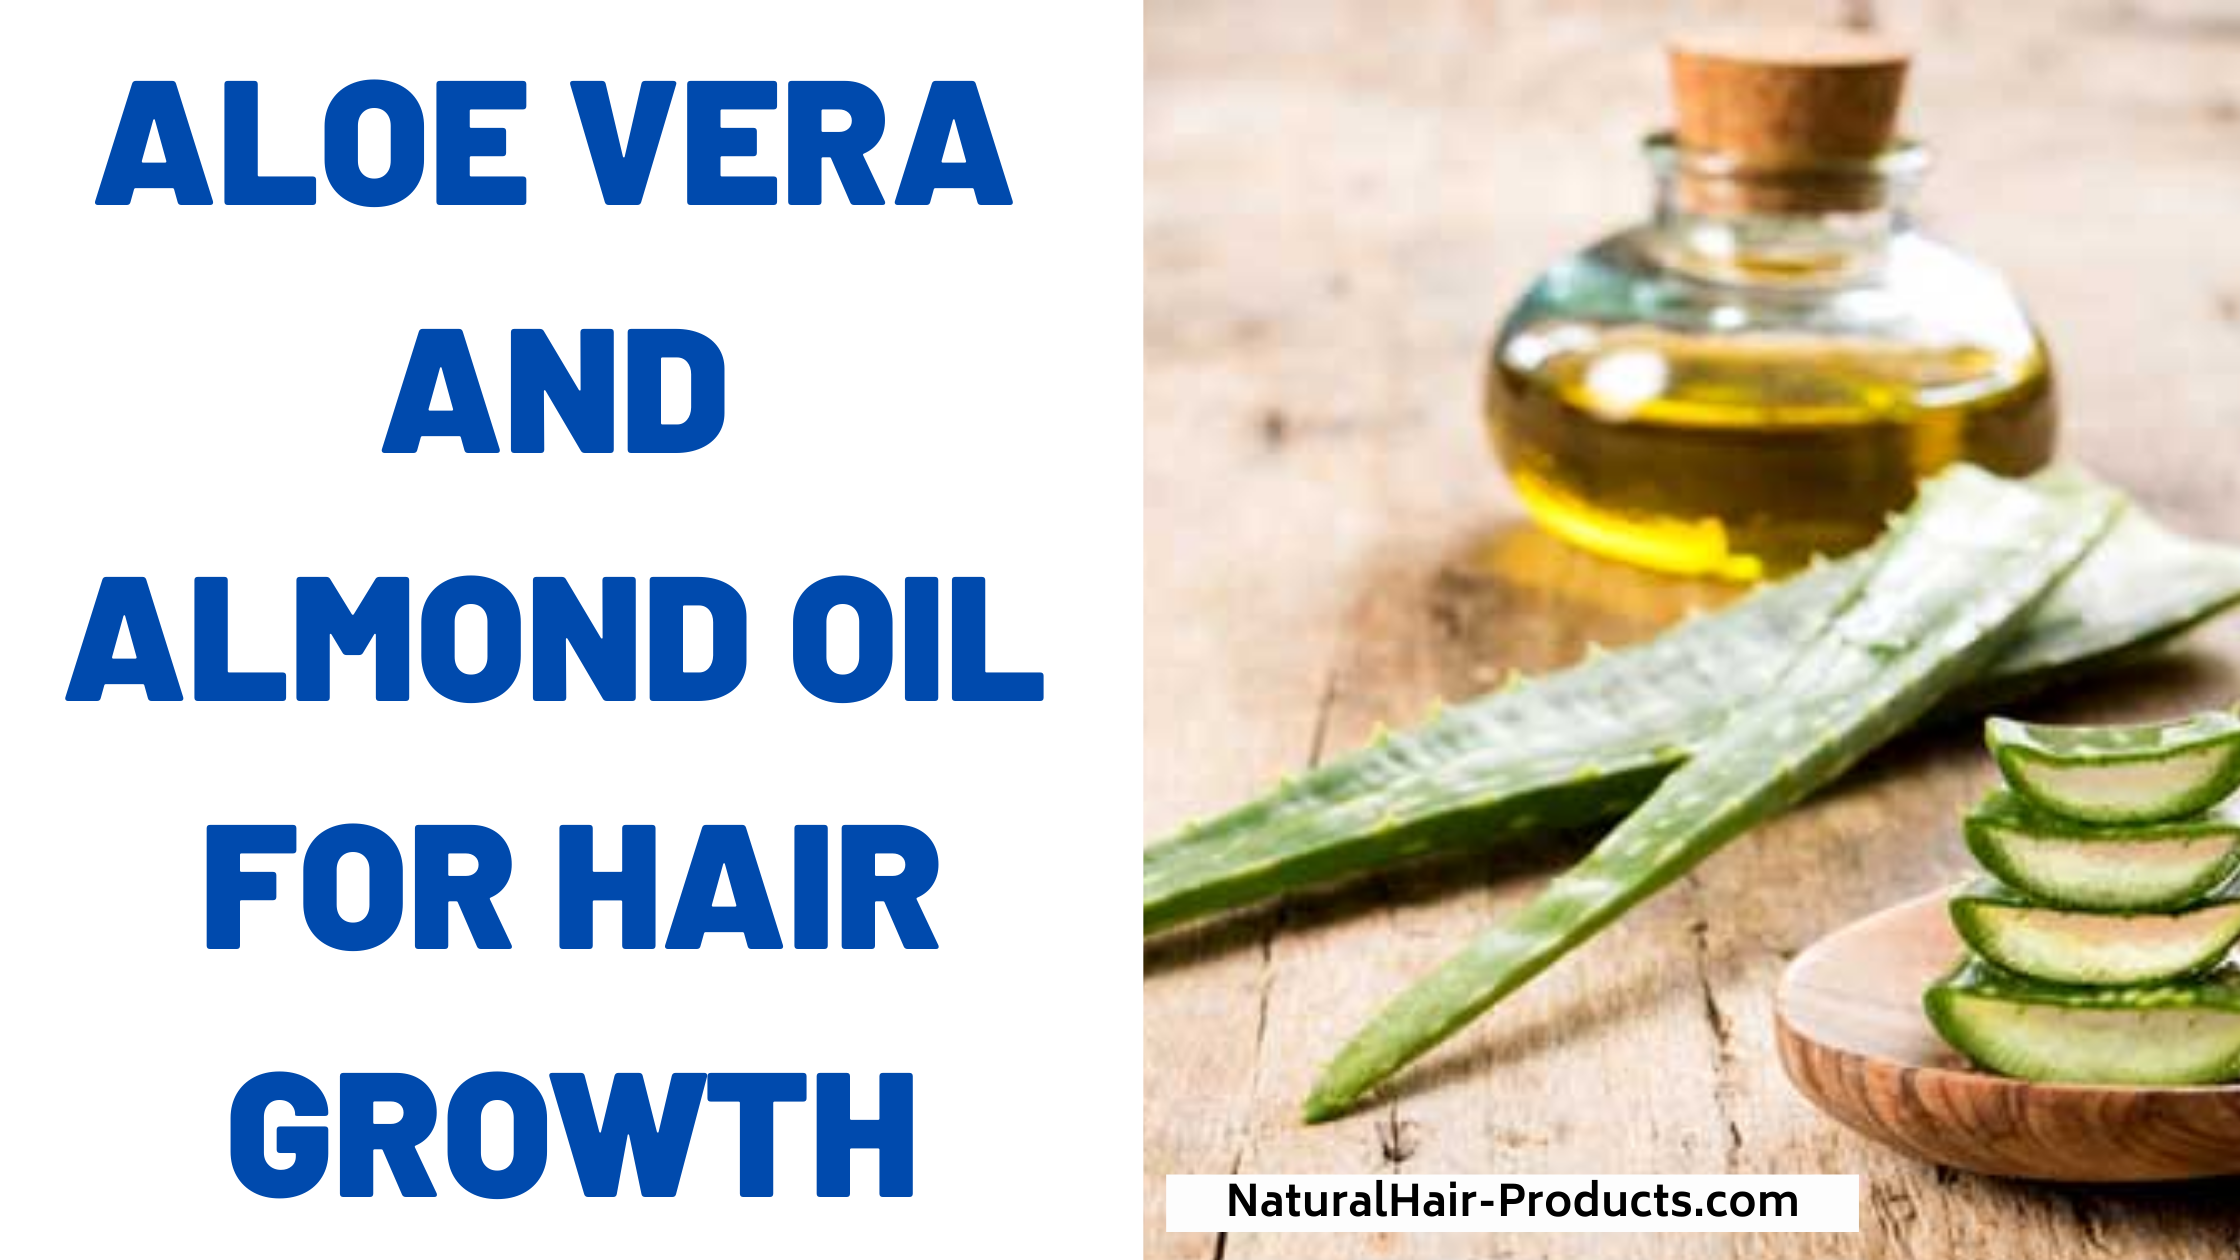 Aloe Vera and Almond Oil for Hair Growth [NHP]